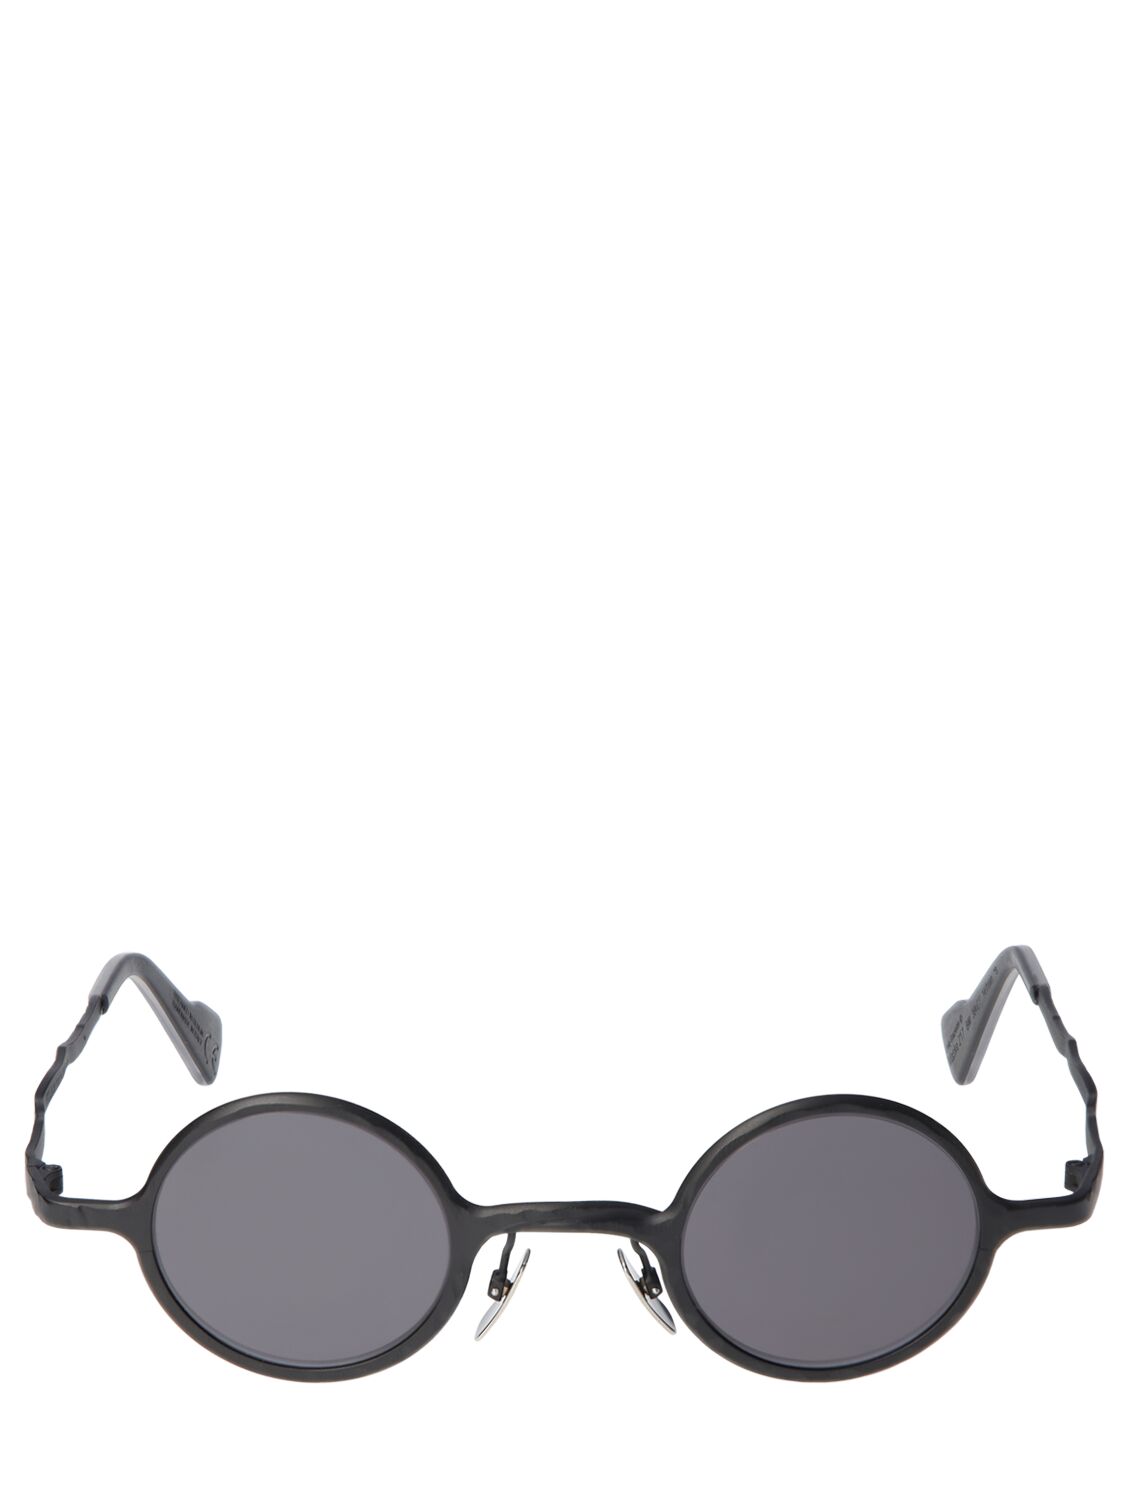 Kuboraum Berlin Z17 Round Metal Sunglasses In Black,grey